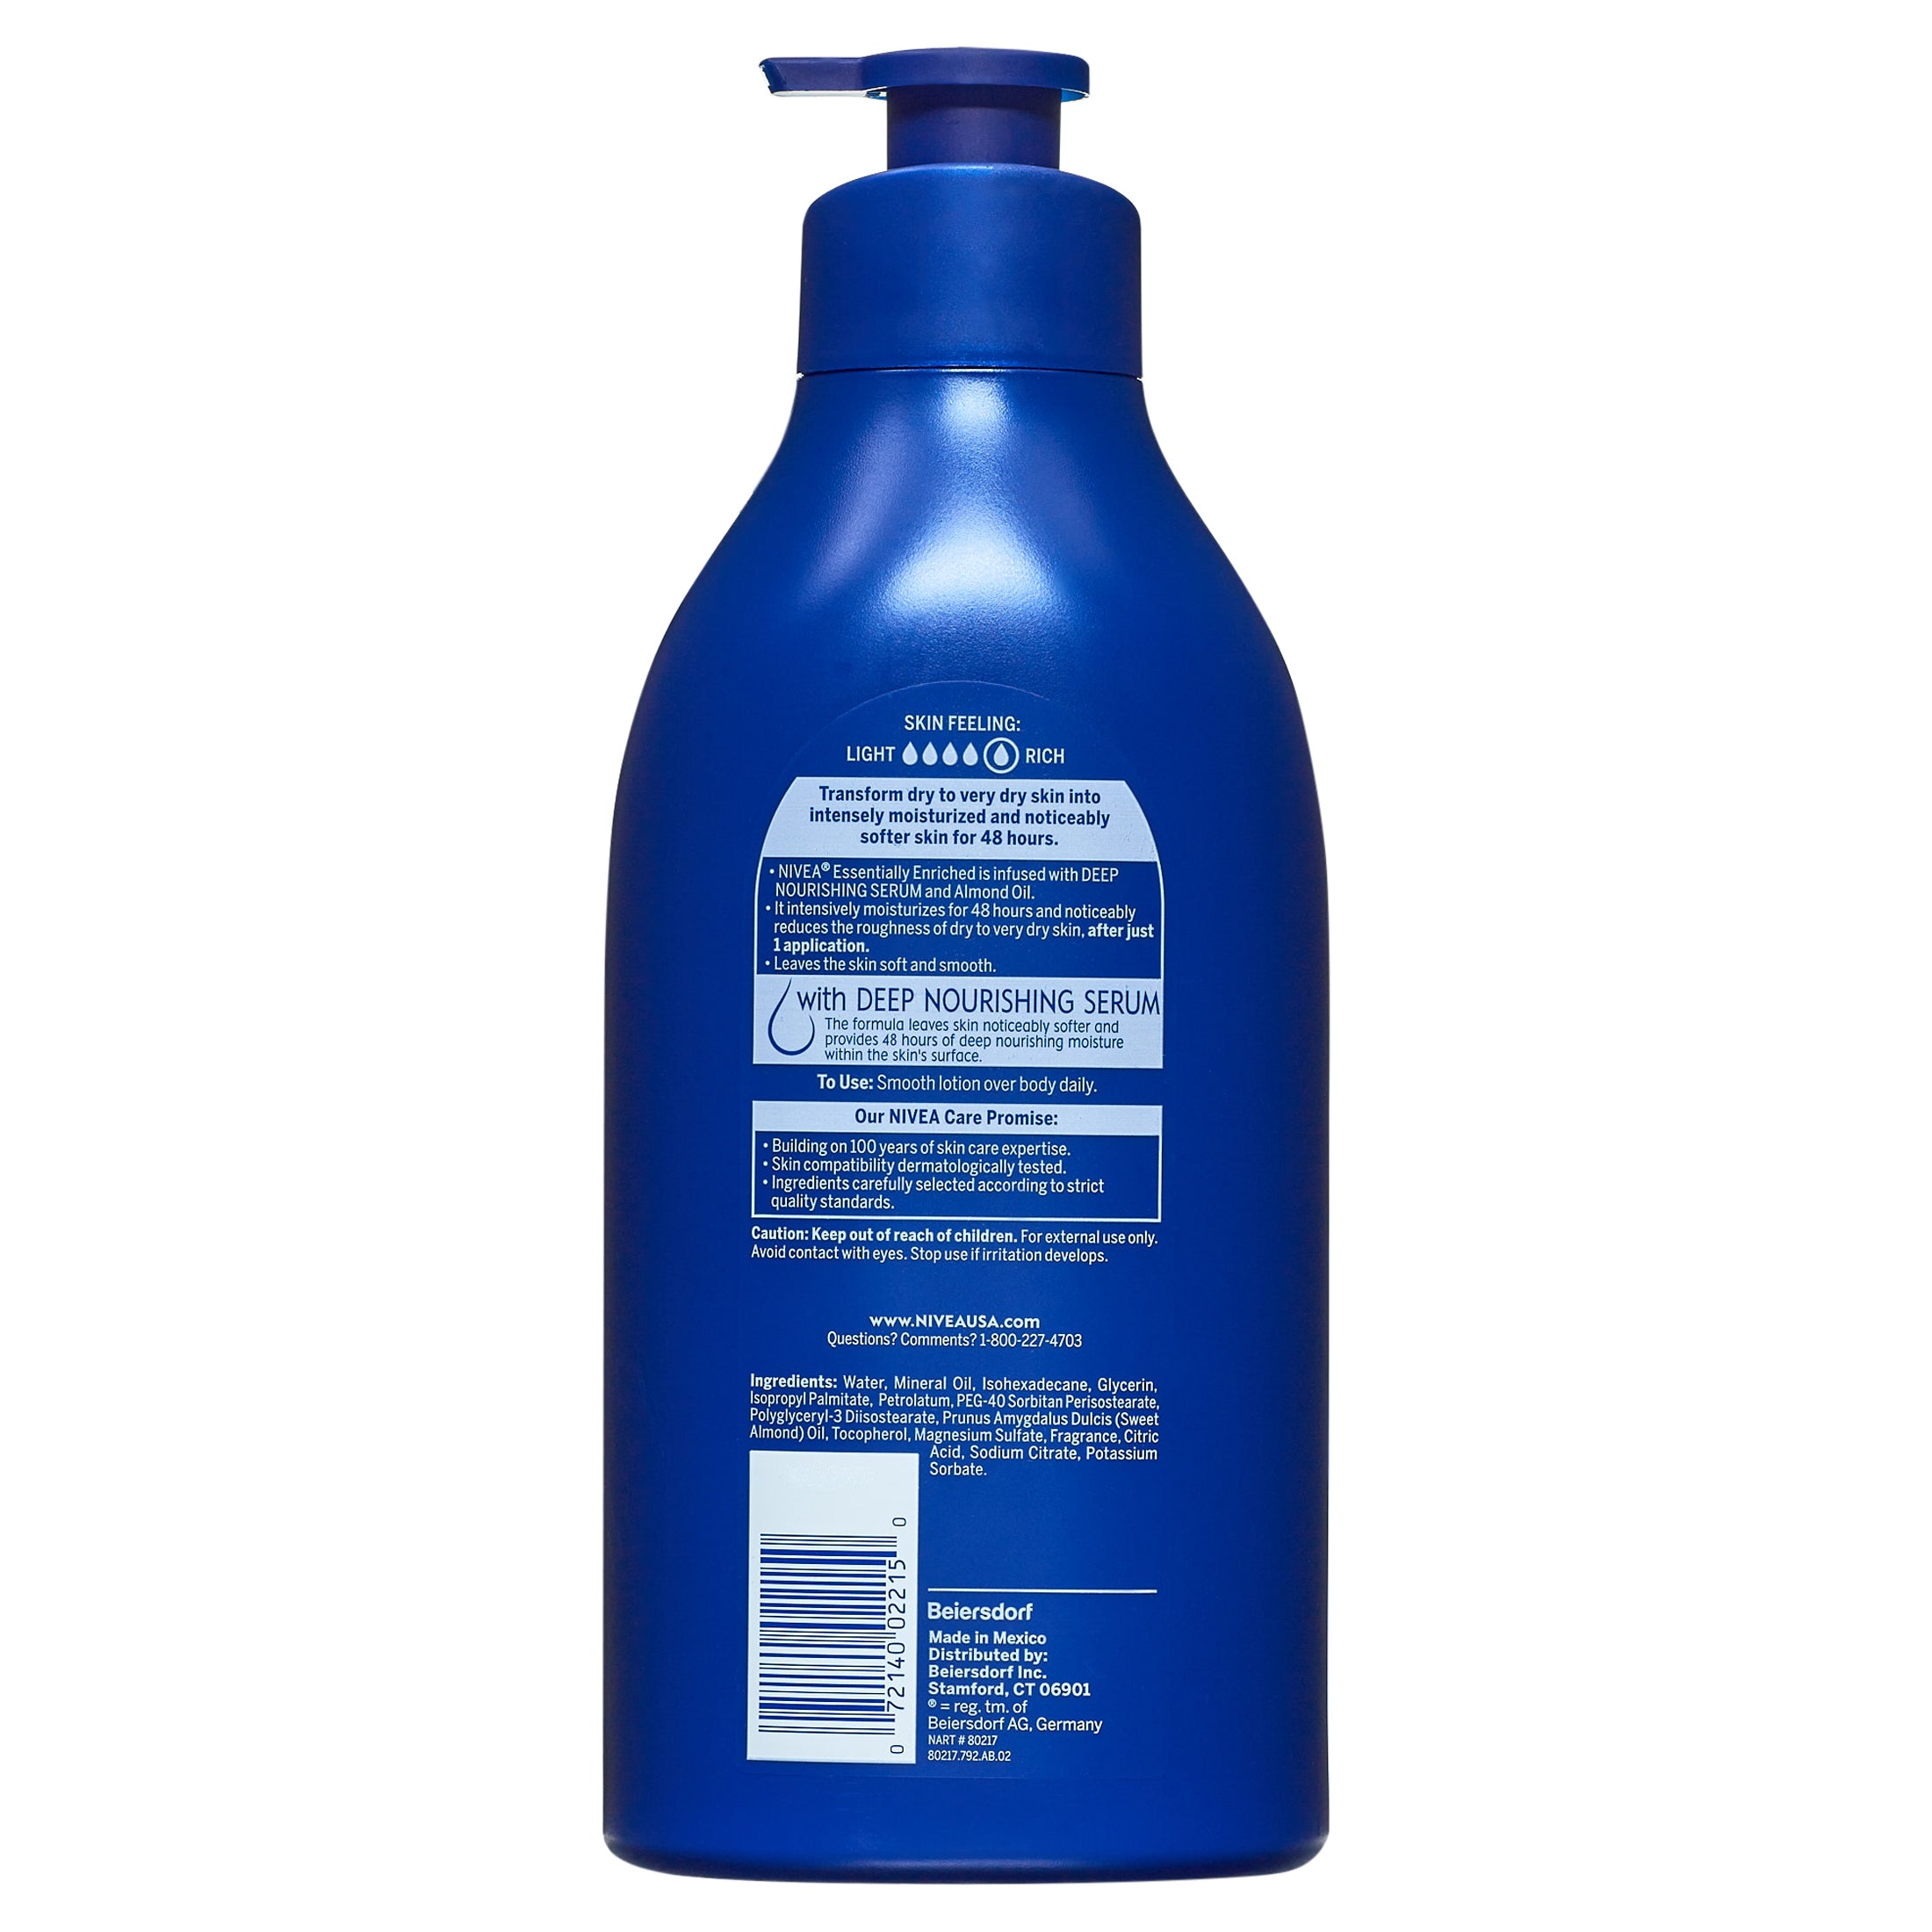 NIVEA Essentially Enriched Body Lotion for Dry Skin, 33.8 Fl Oz Pump Bottle | MTTS200